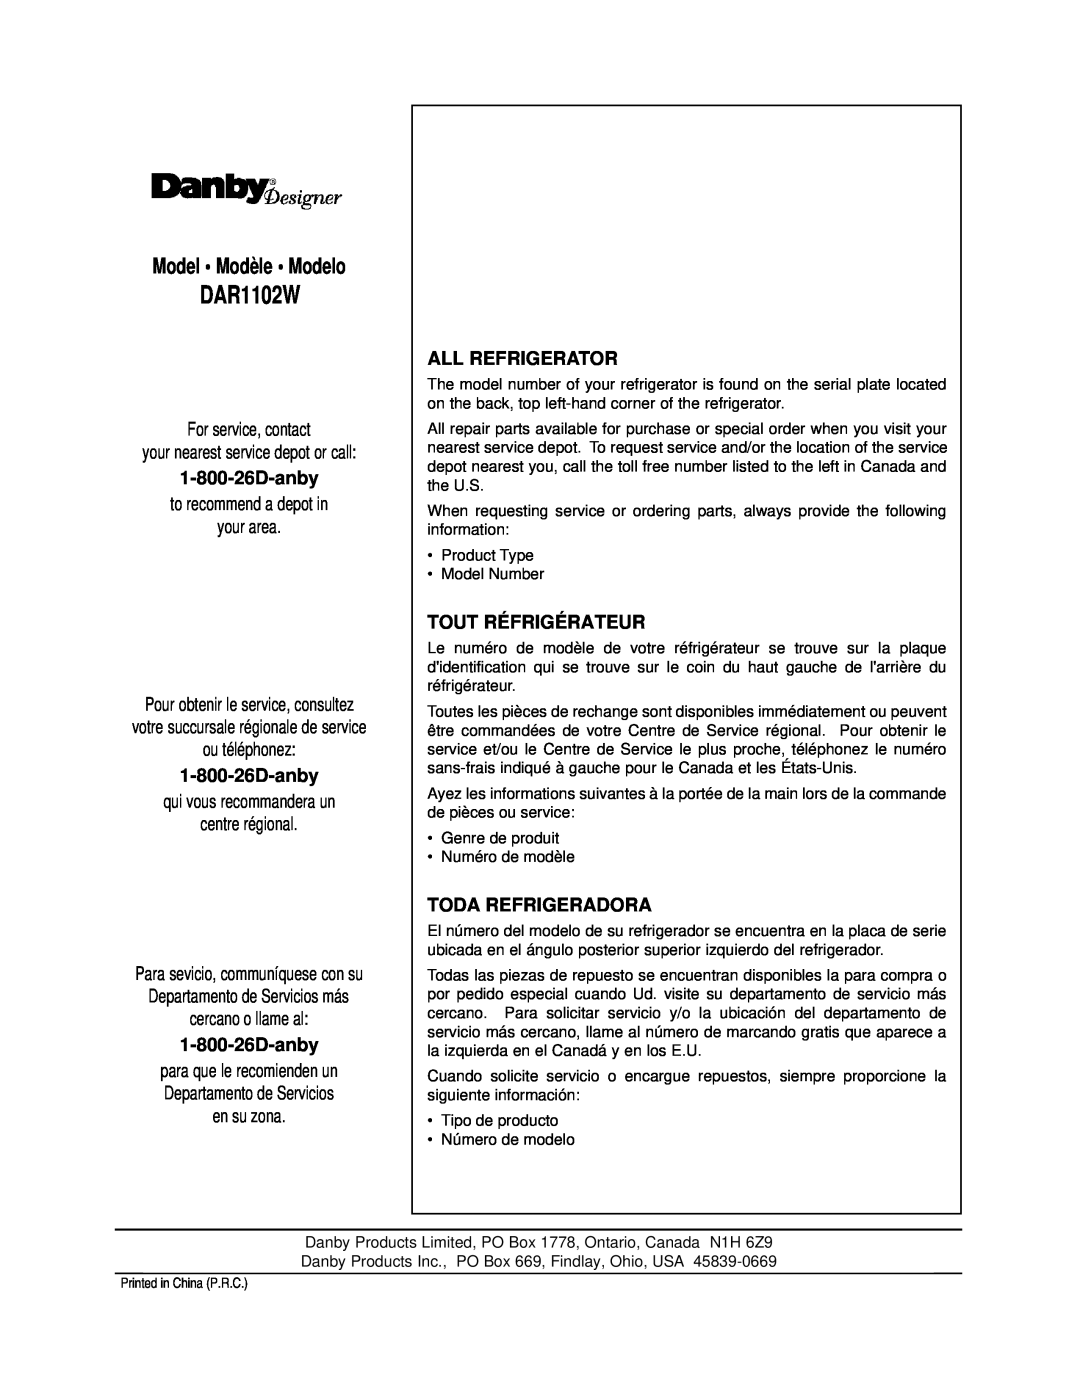 Danby DAR1102W manual All Refrigerator, Tout Ri Frigi Rateur, Toda Refrigeradora, Model, Mod le, Modelo 